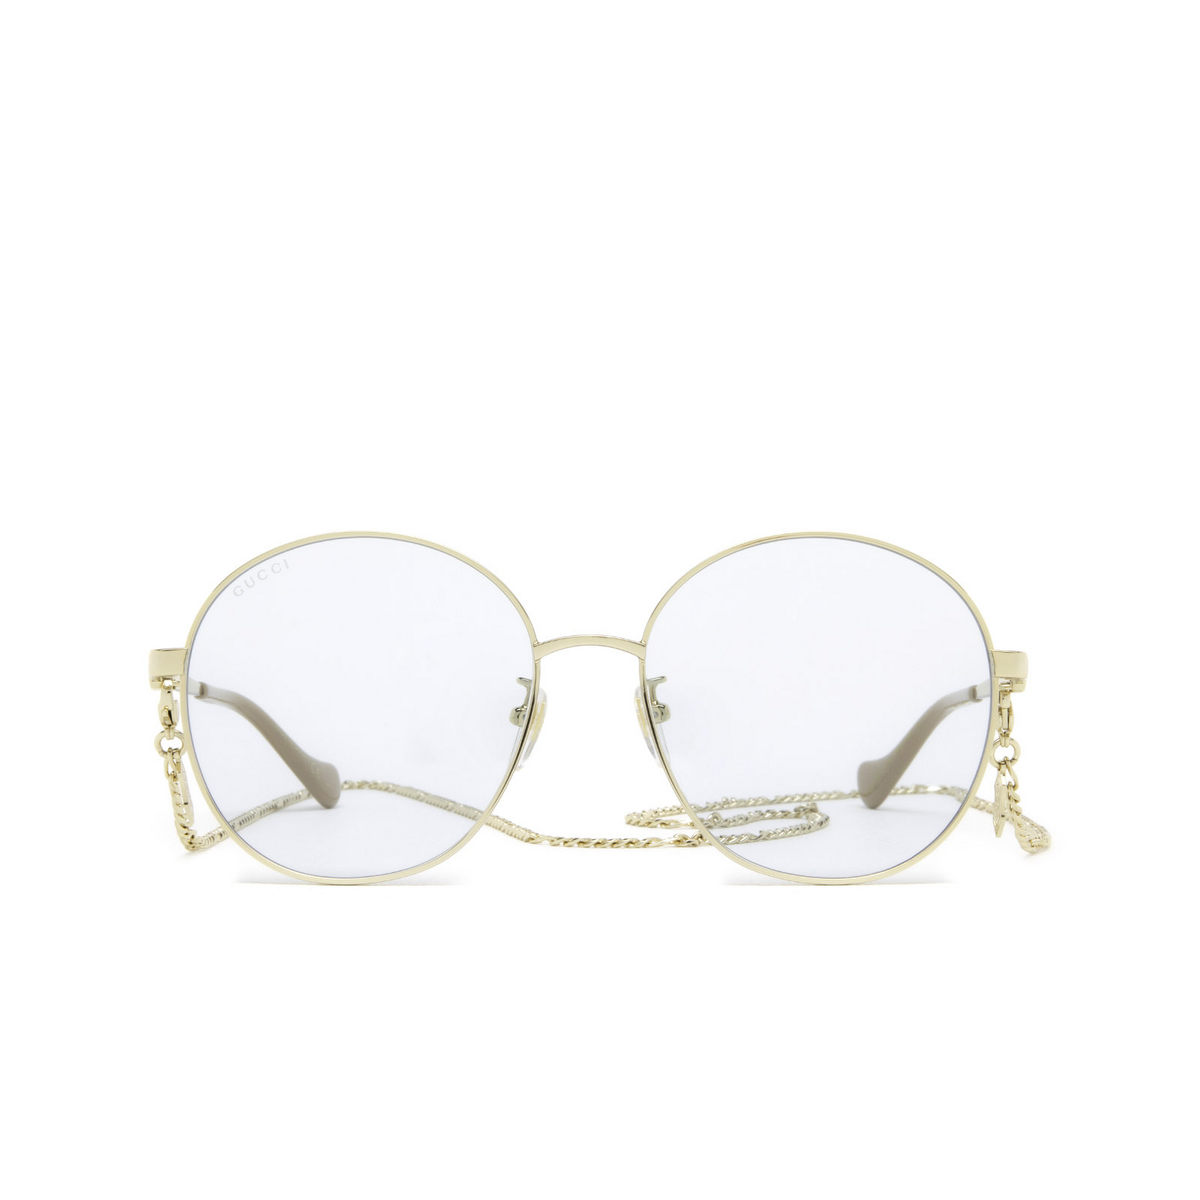 Gucci® Round Sunglasses: GG1090SA color Gold 004 - front view.